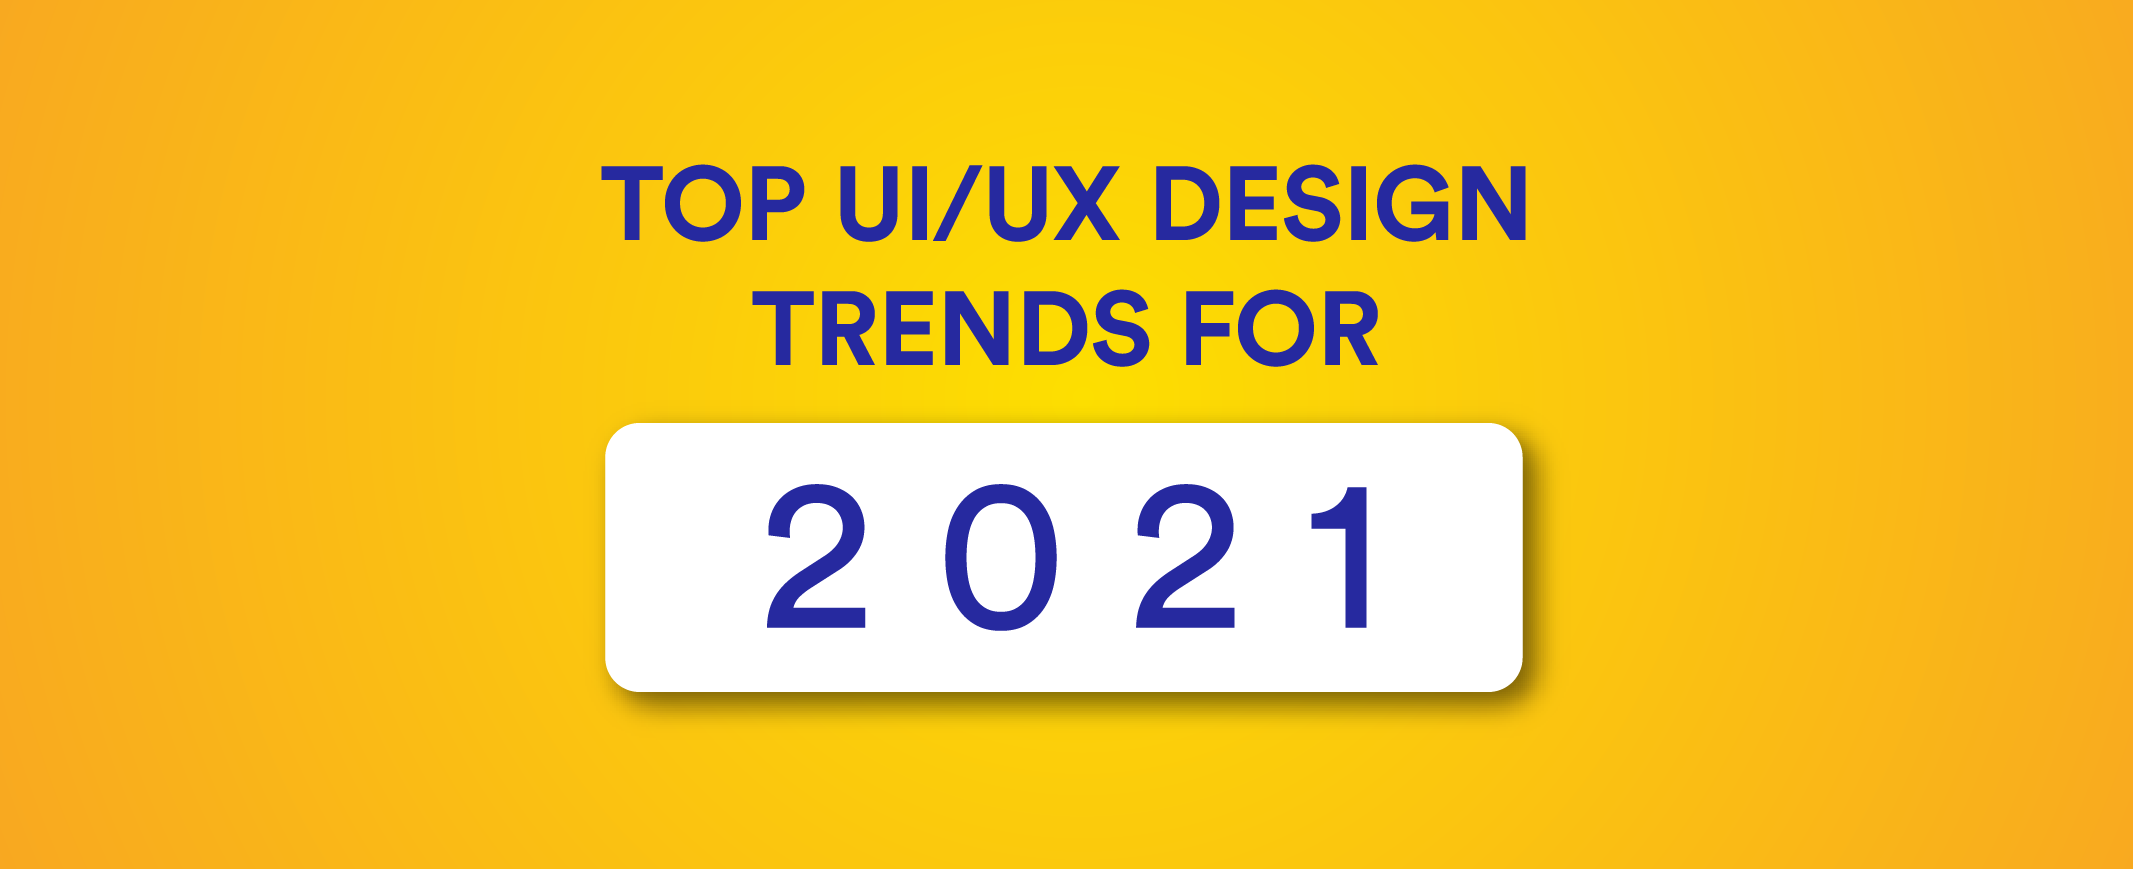 Top UI/UX Design Trends For 2021